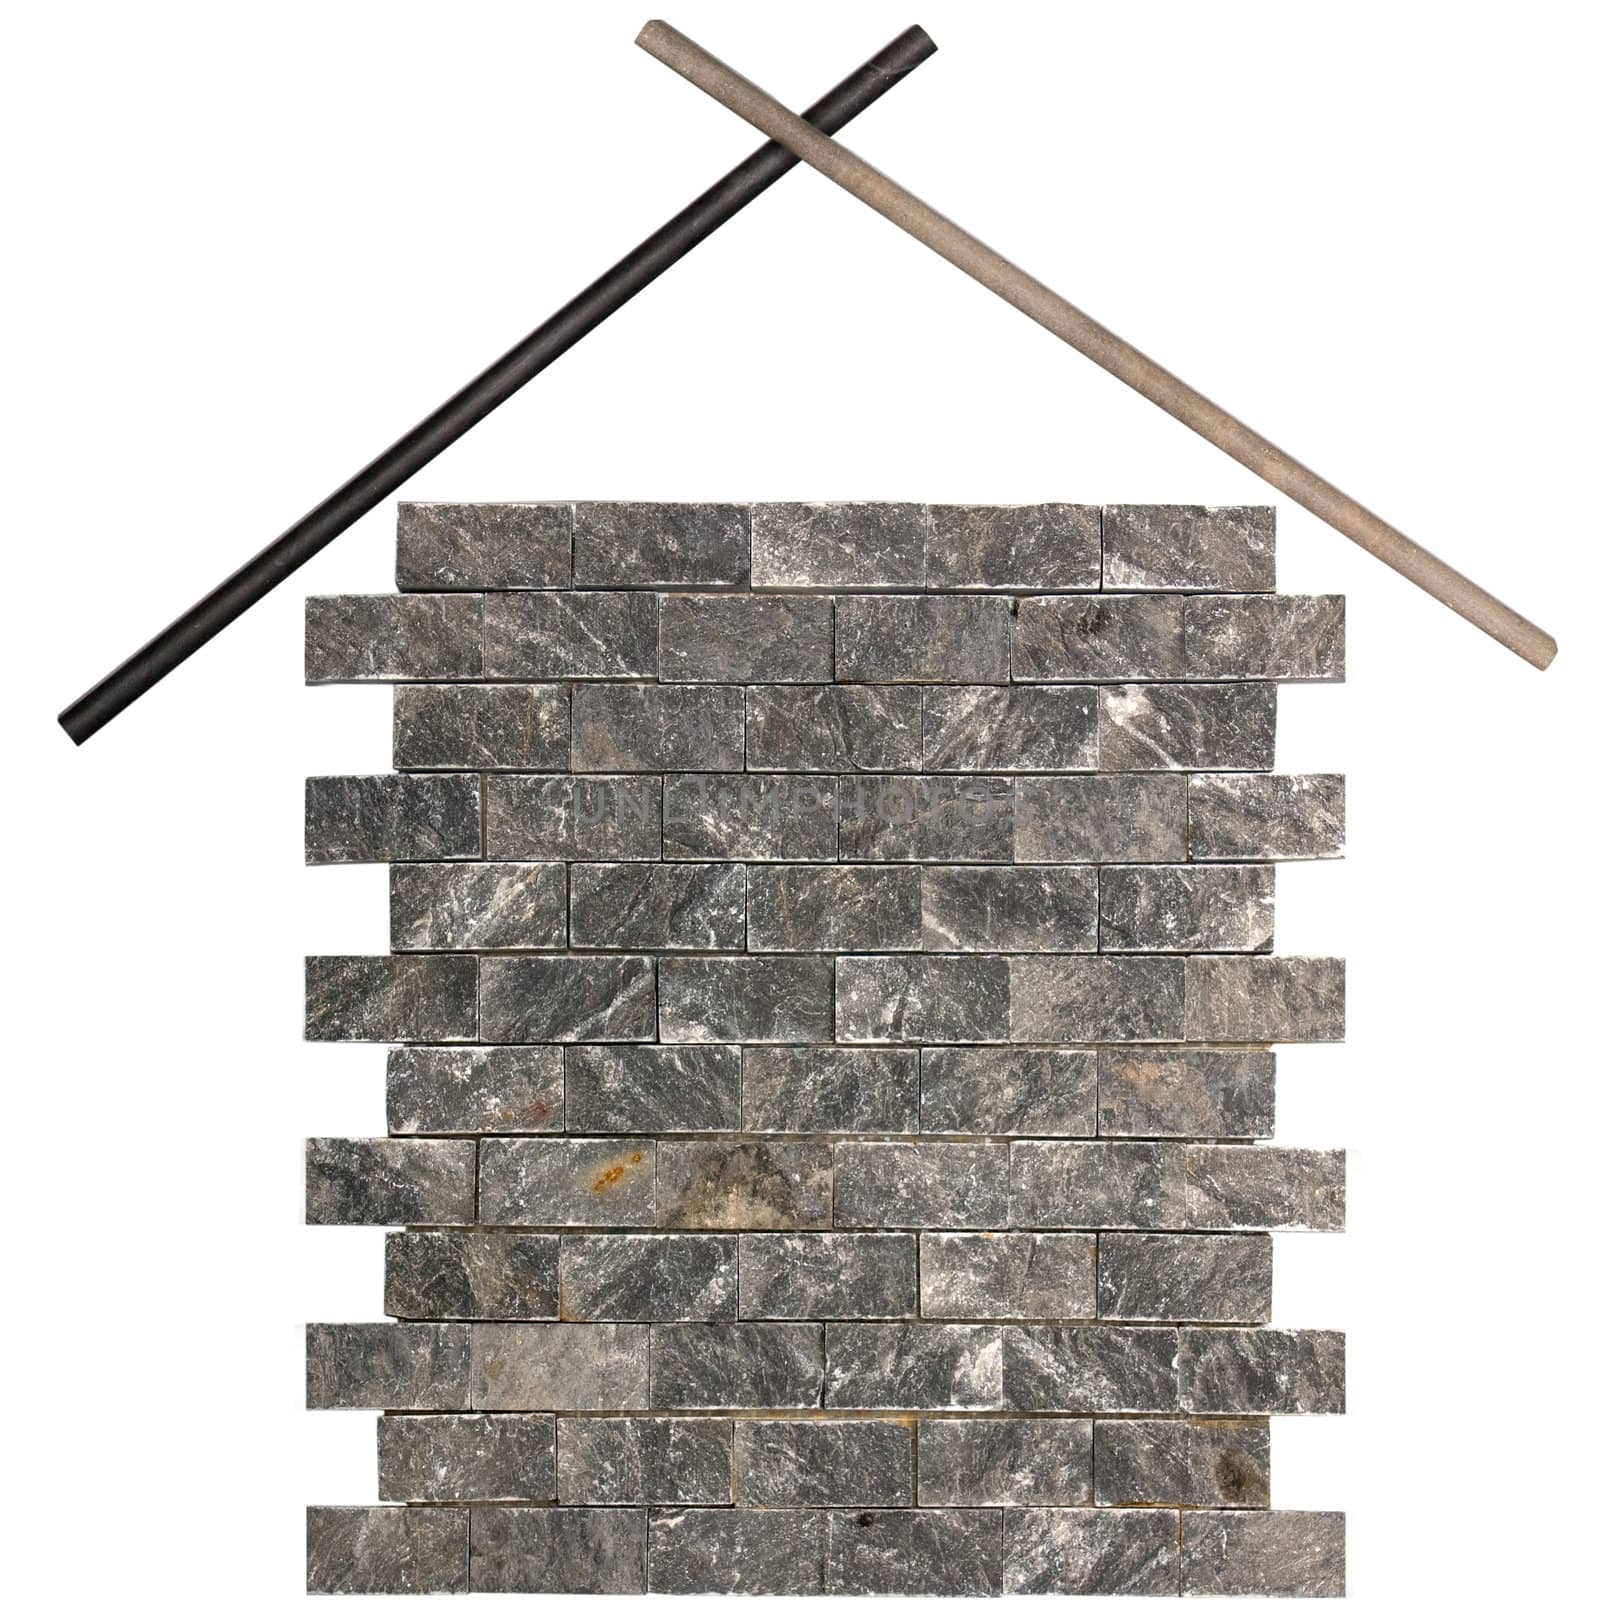 Brick house tile facade isolated on white background